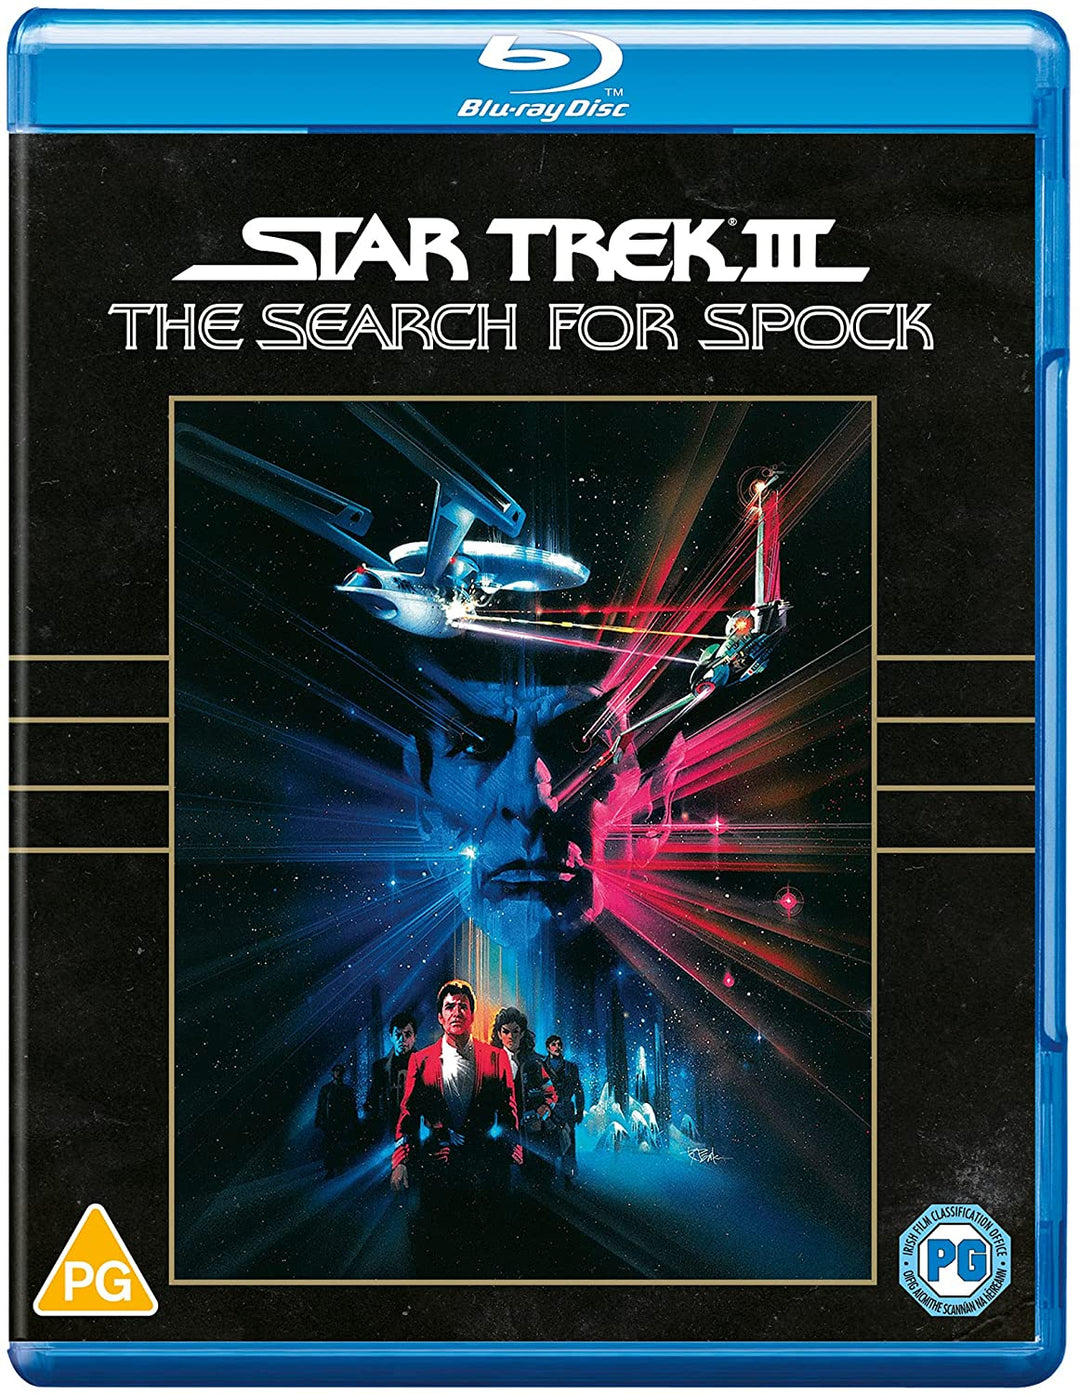 Star Trek III: The Search For Spock - Sci-fi [Blu-ray]